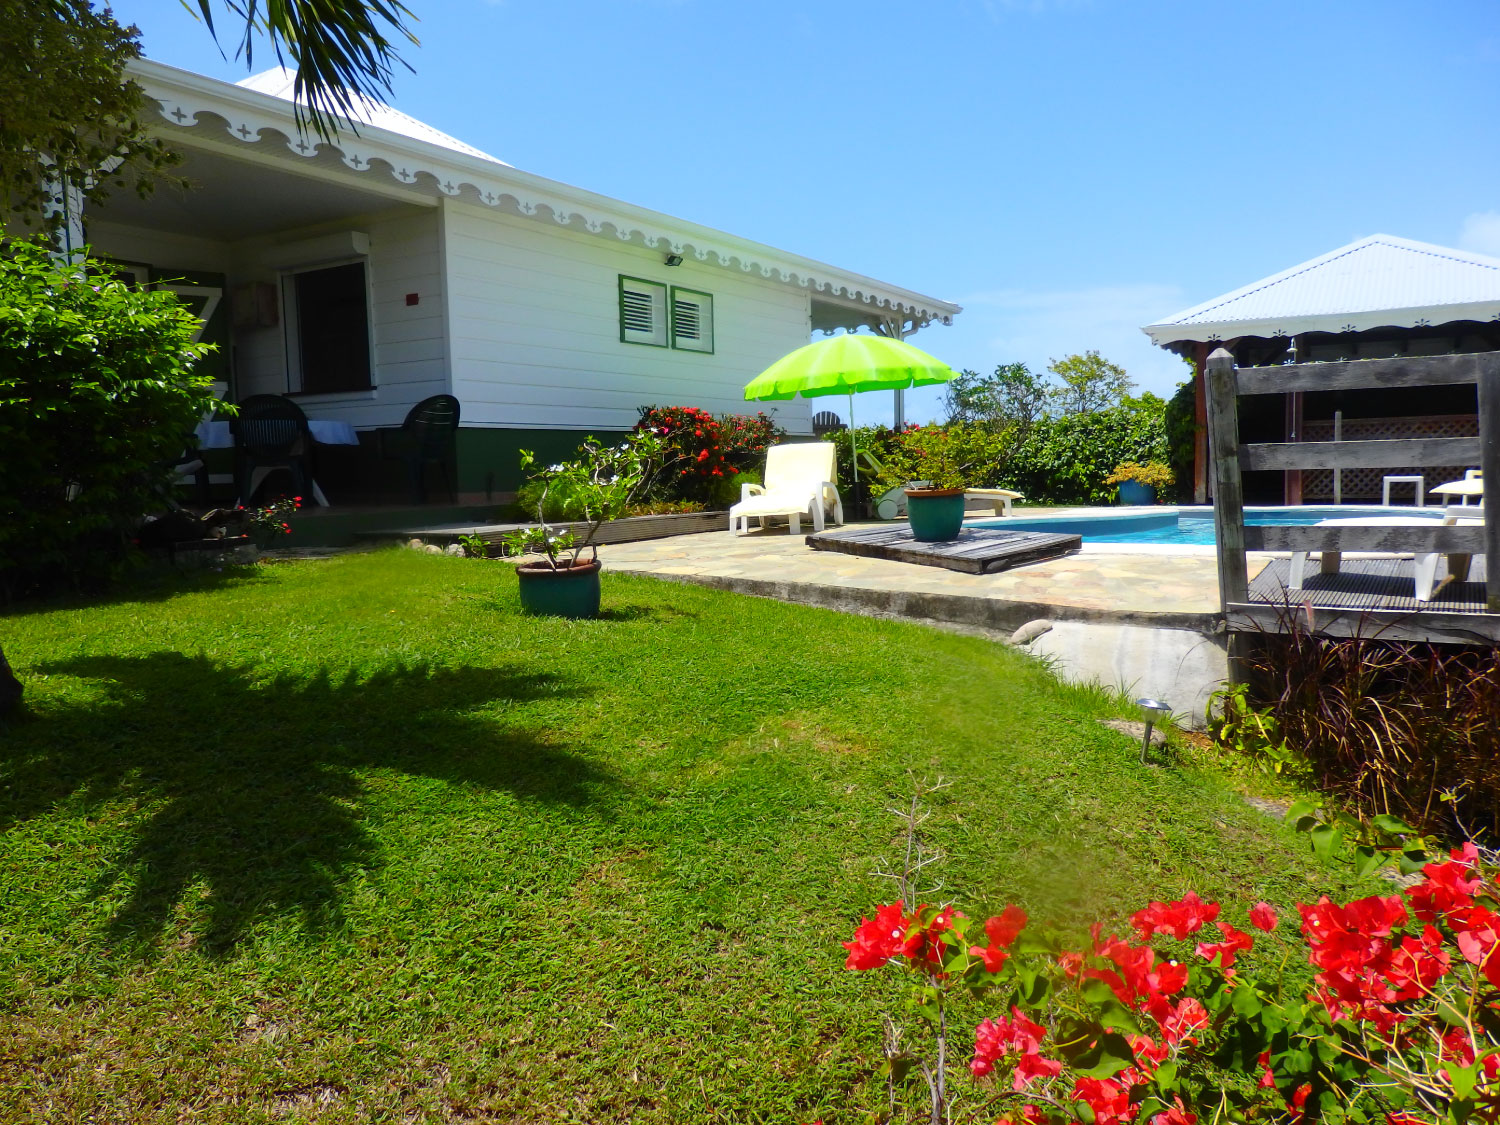 Location appartements (de type studio) en Martinique - VANILLE DES ISLES